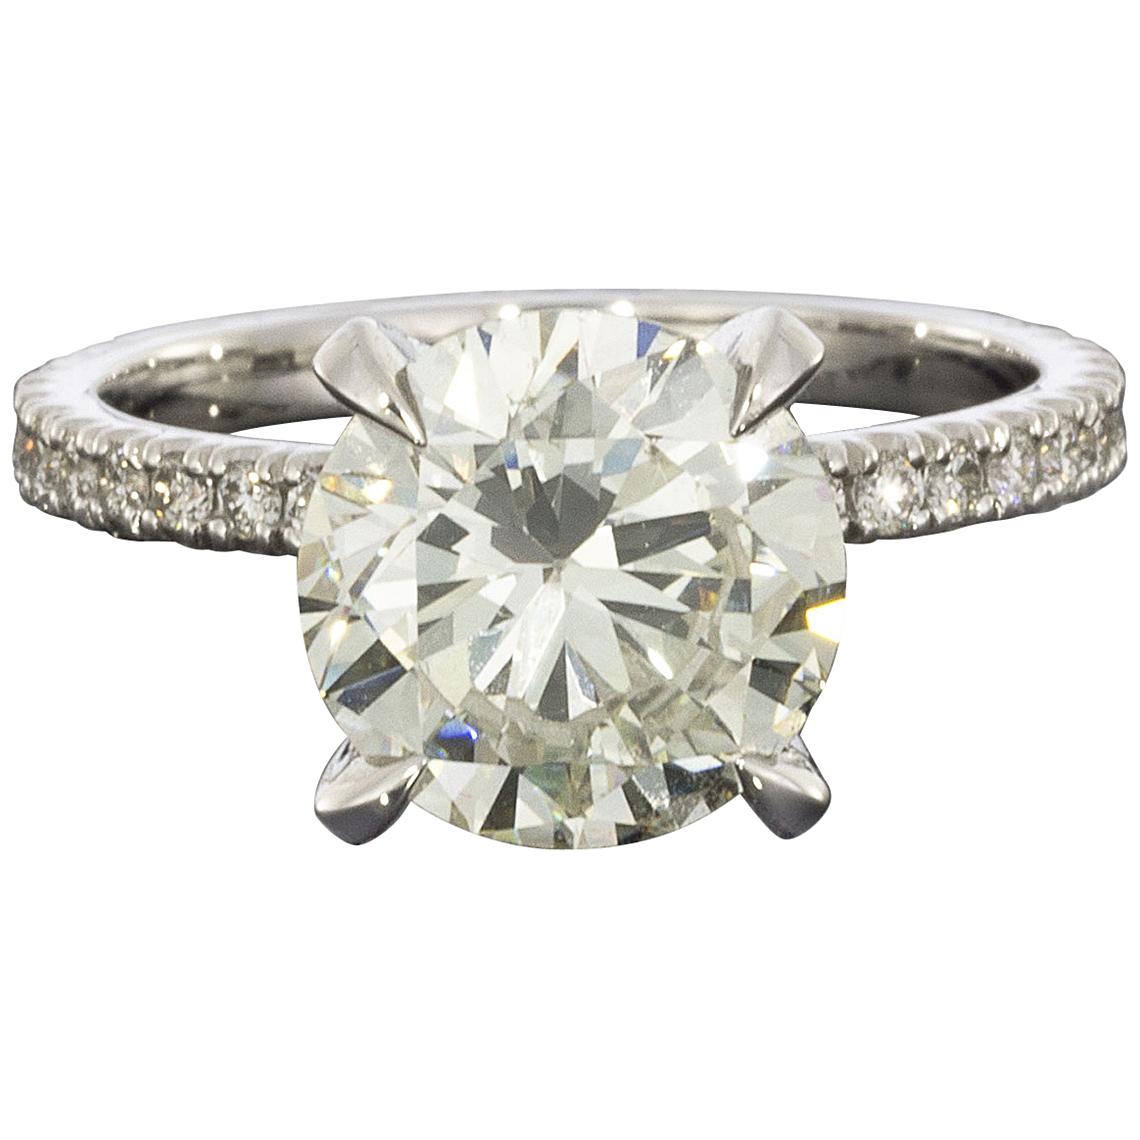 Platinum 3.36 Carat Round Diamond GIA Certified Engagement Ring